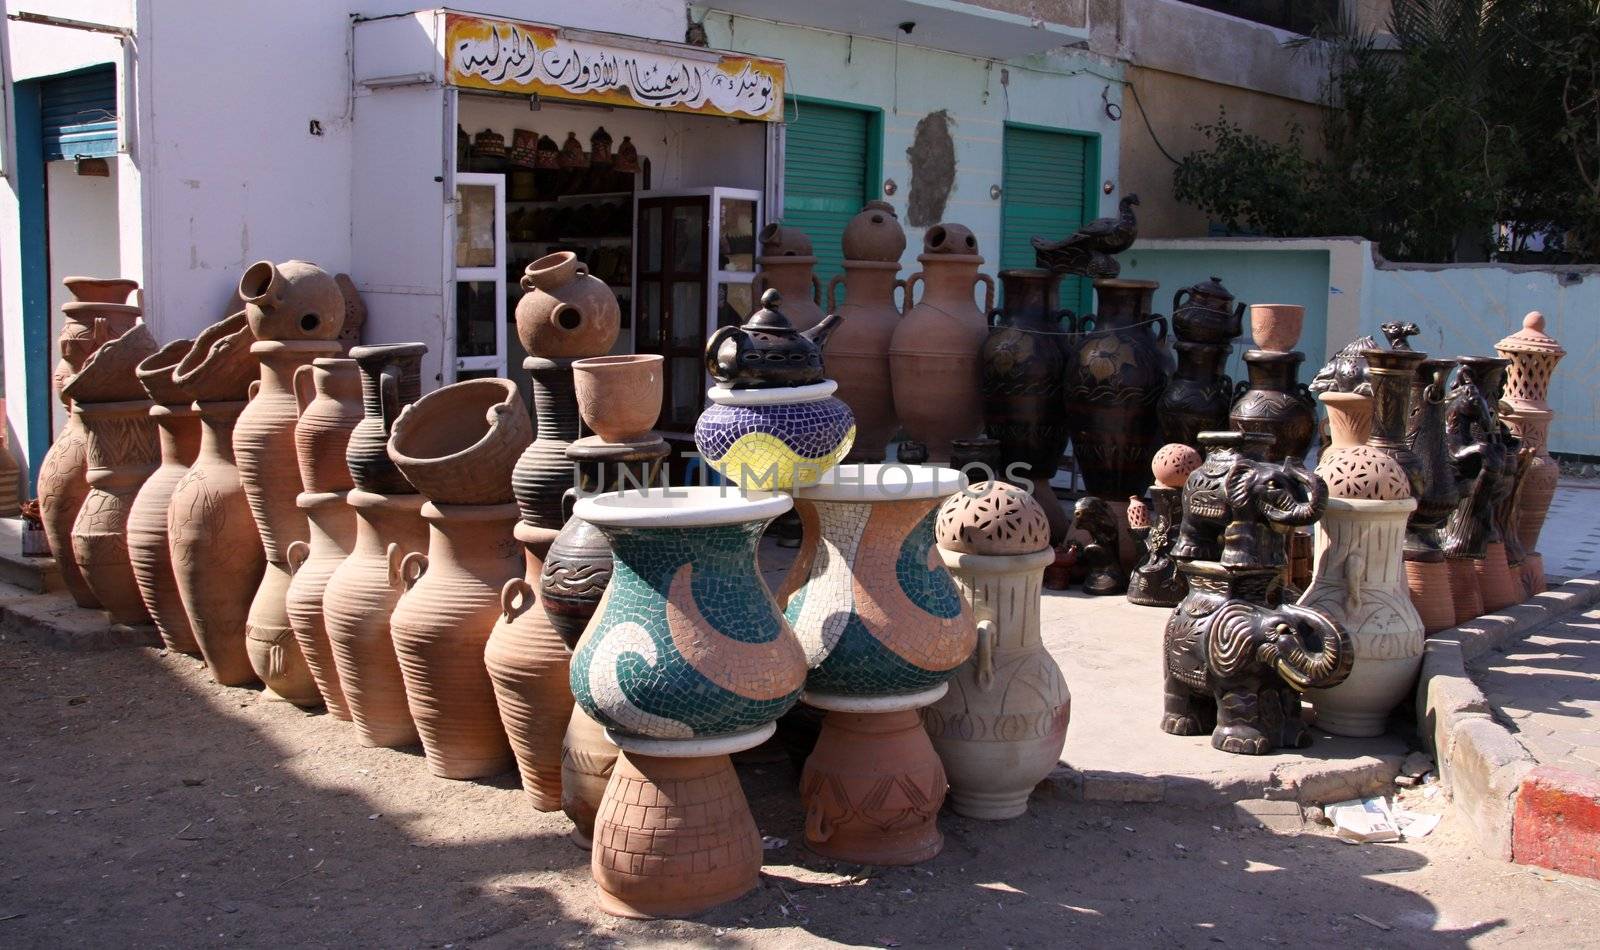 Ceramics shop on the street